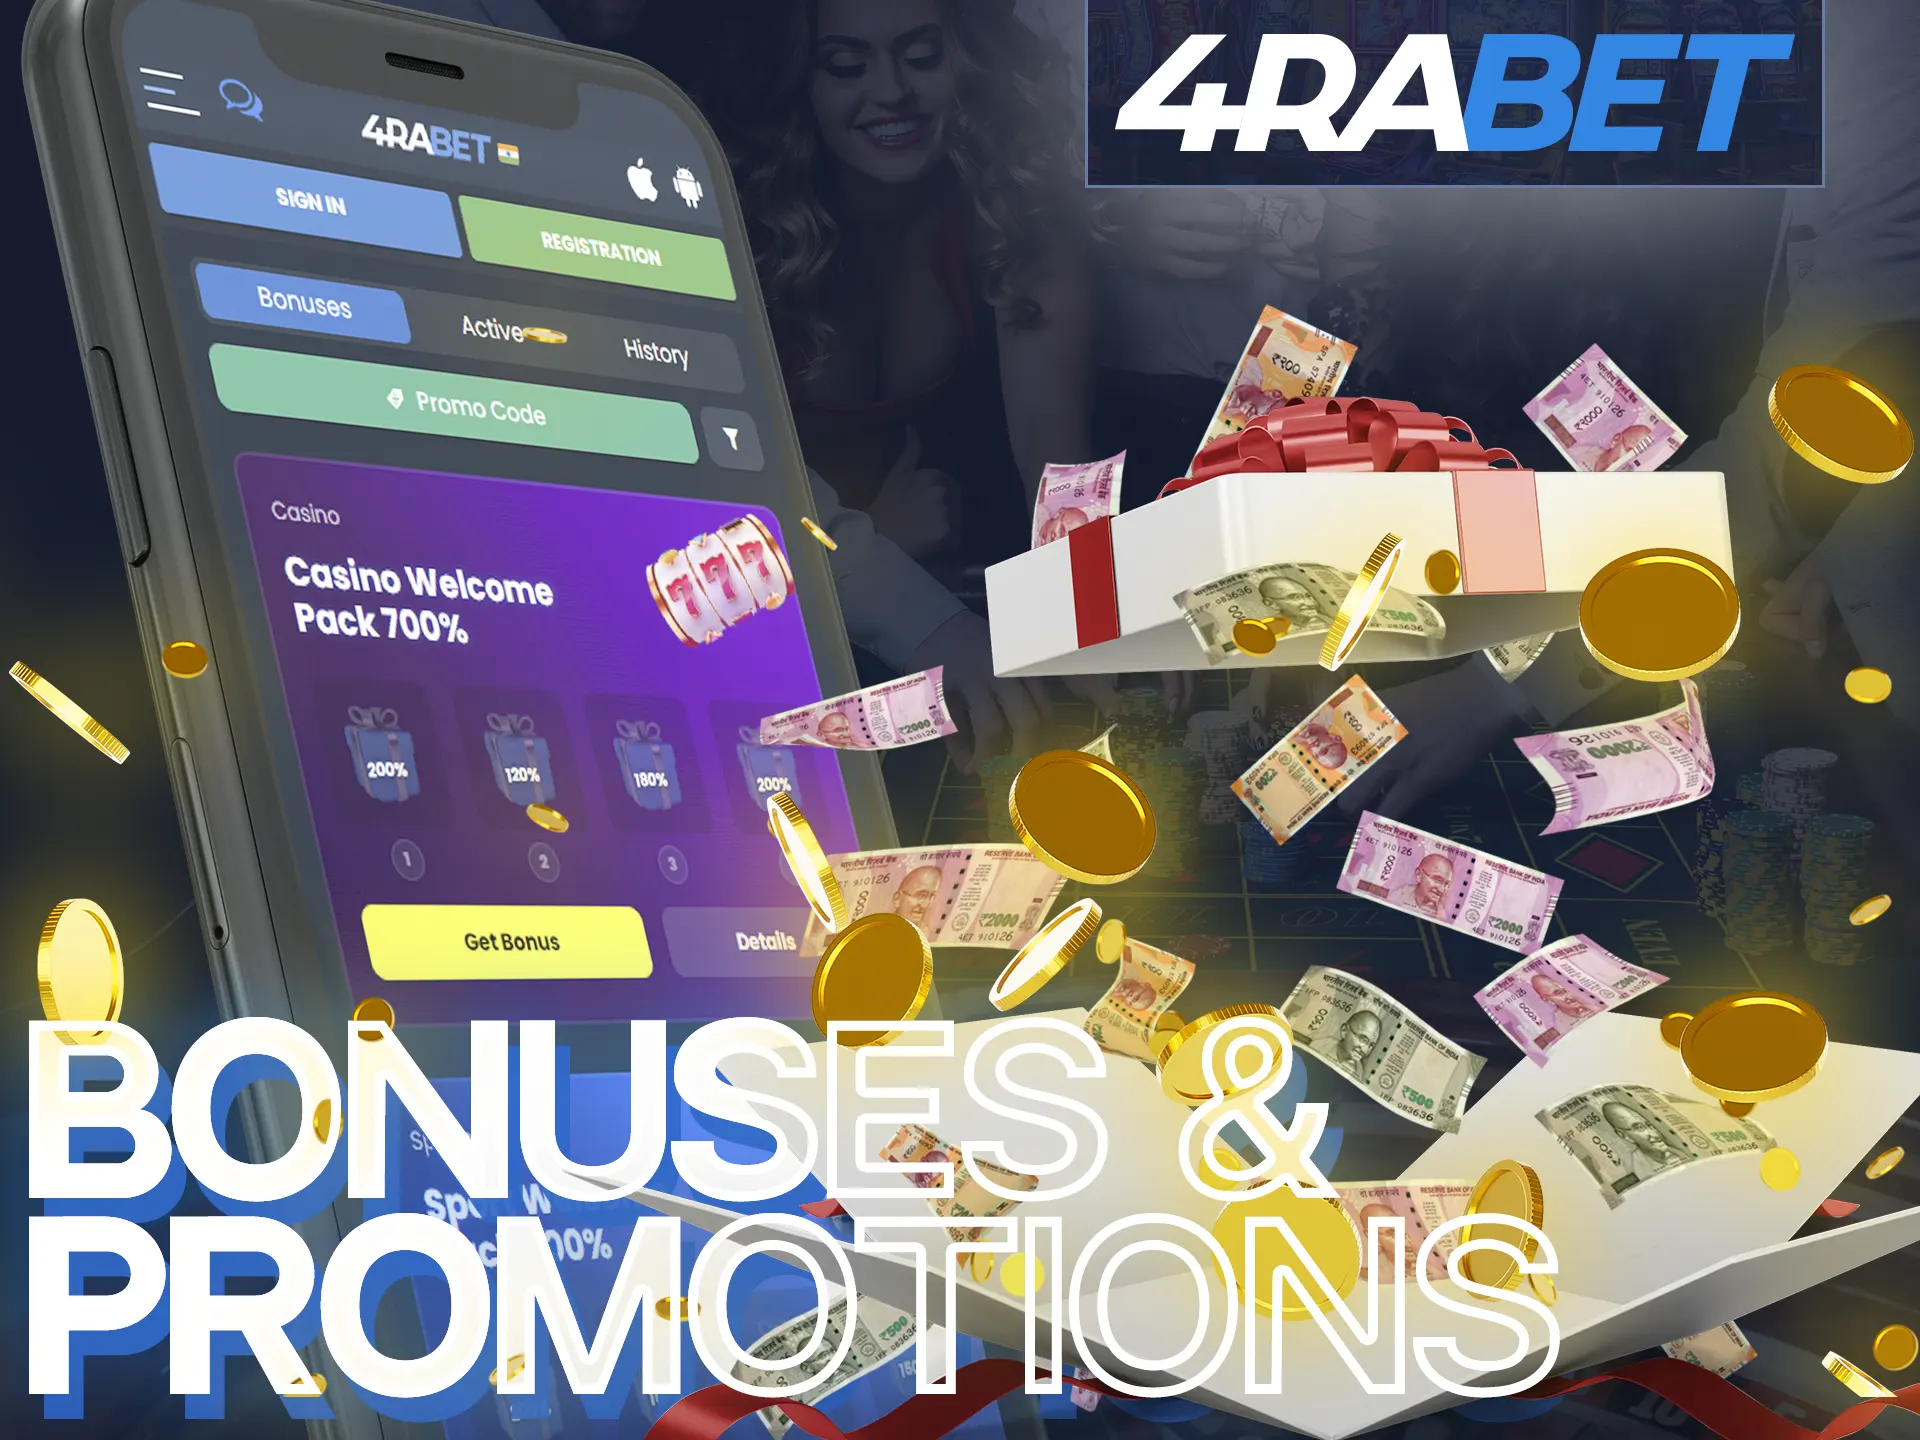 Take advantage of the bonuses on the 4Rabet app.